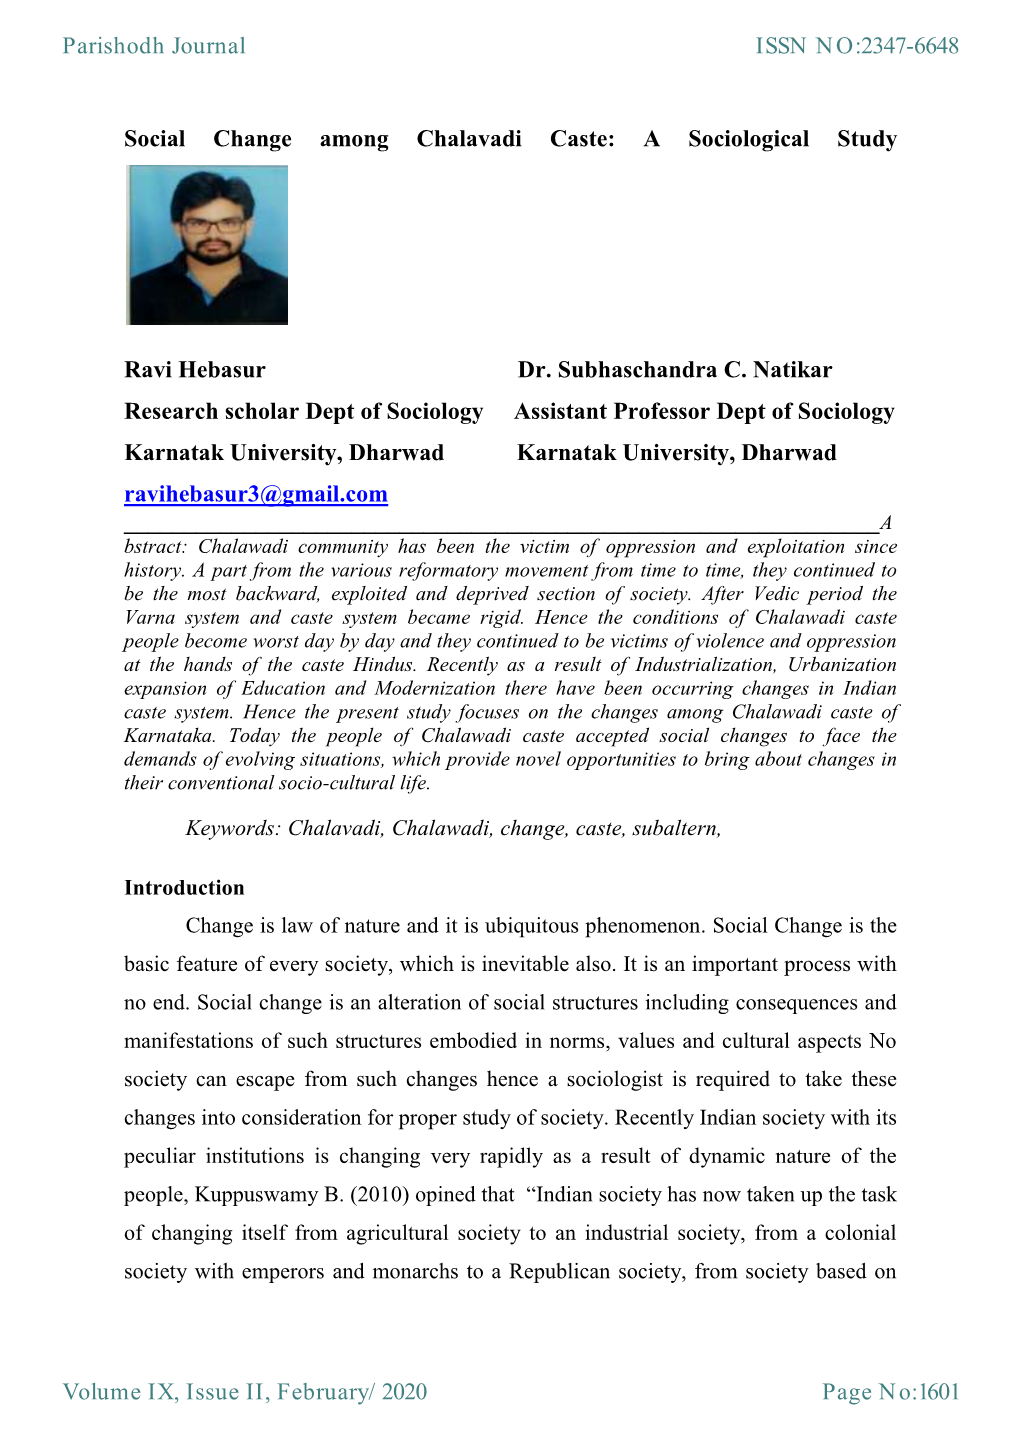 Social Change Among Chalavadi Caste: a Sociological Study